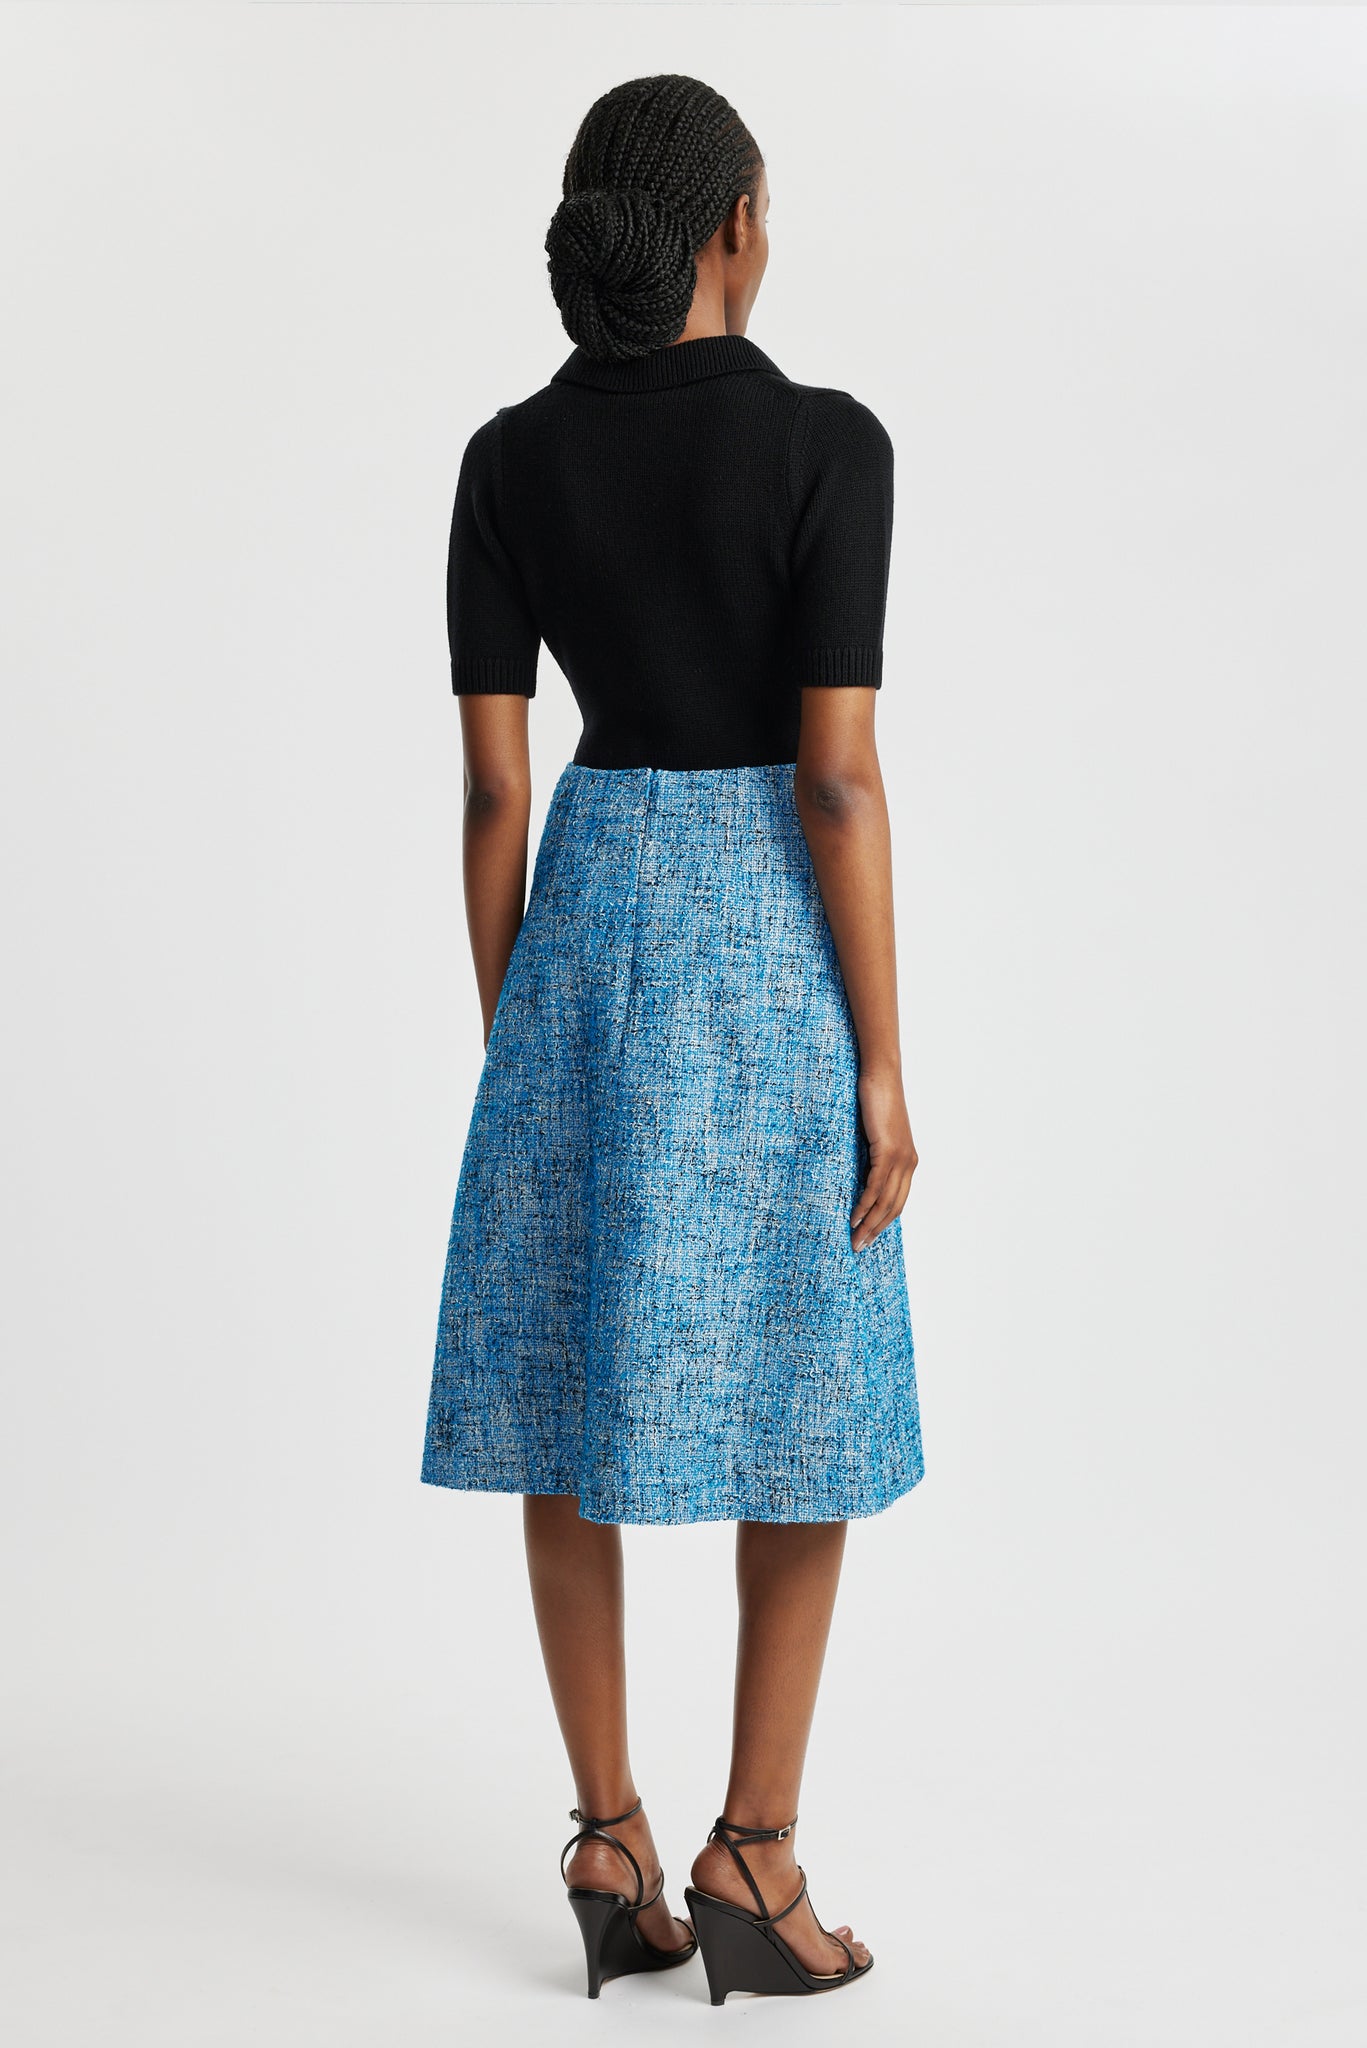 Tamsyn Skirt In Blue Cotton Tweed | Emilia Wickstead